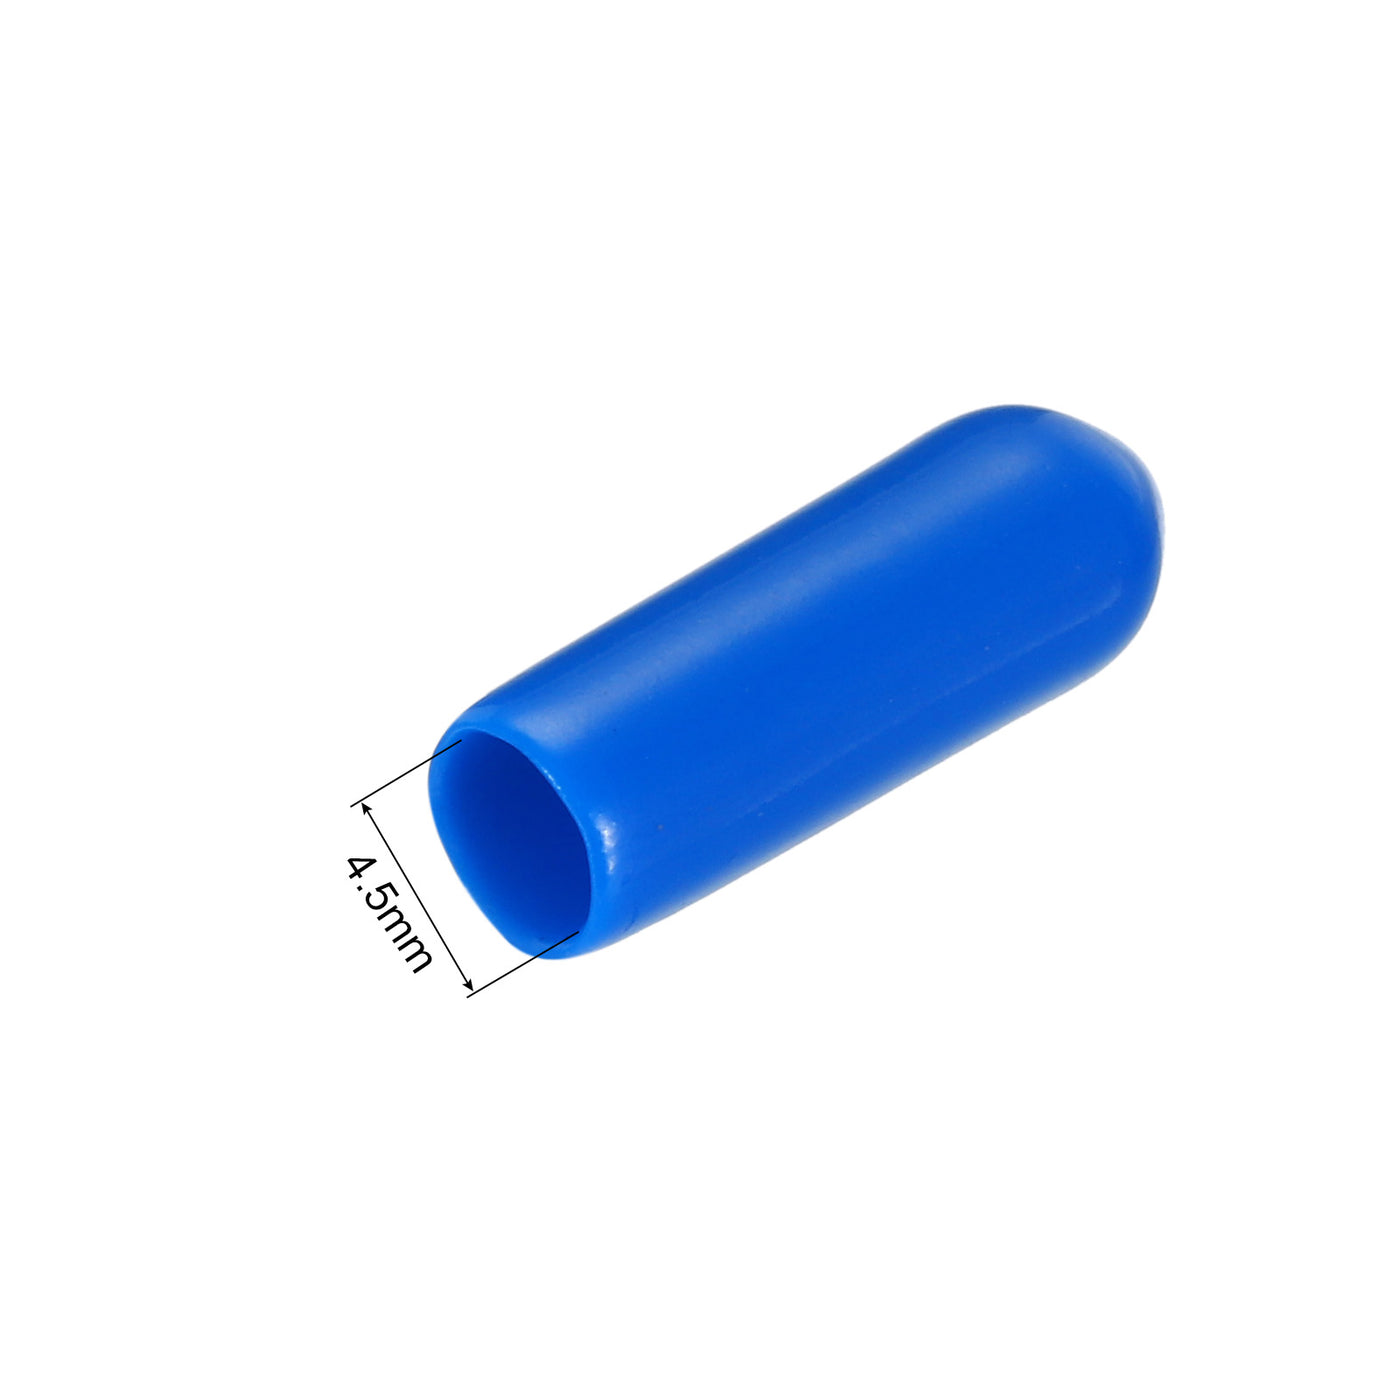 uxcell Uxcell 50pcs Rubber End Caps 4.5mm ID Vinyl PVC Round Tube Bolt Cap Cover Screw Thread Protectors Blue